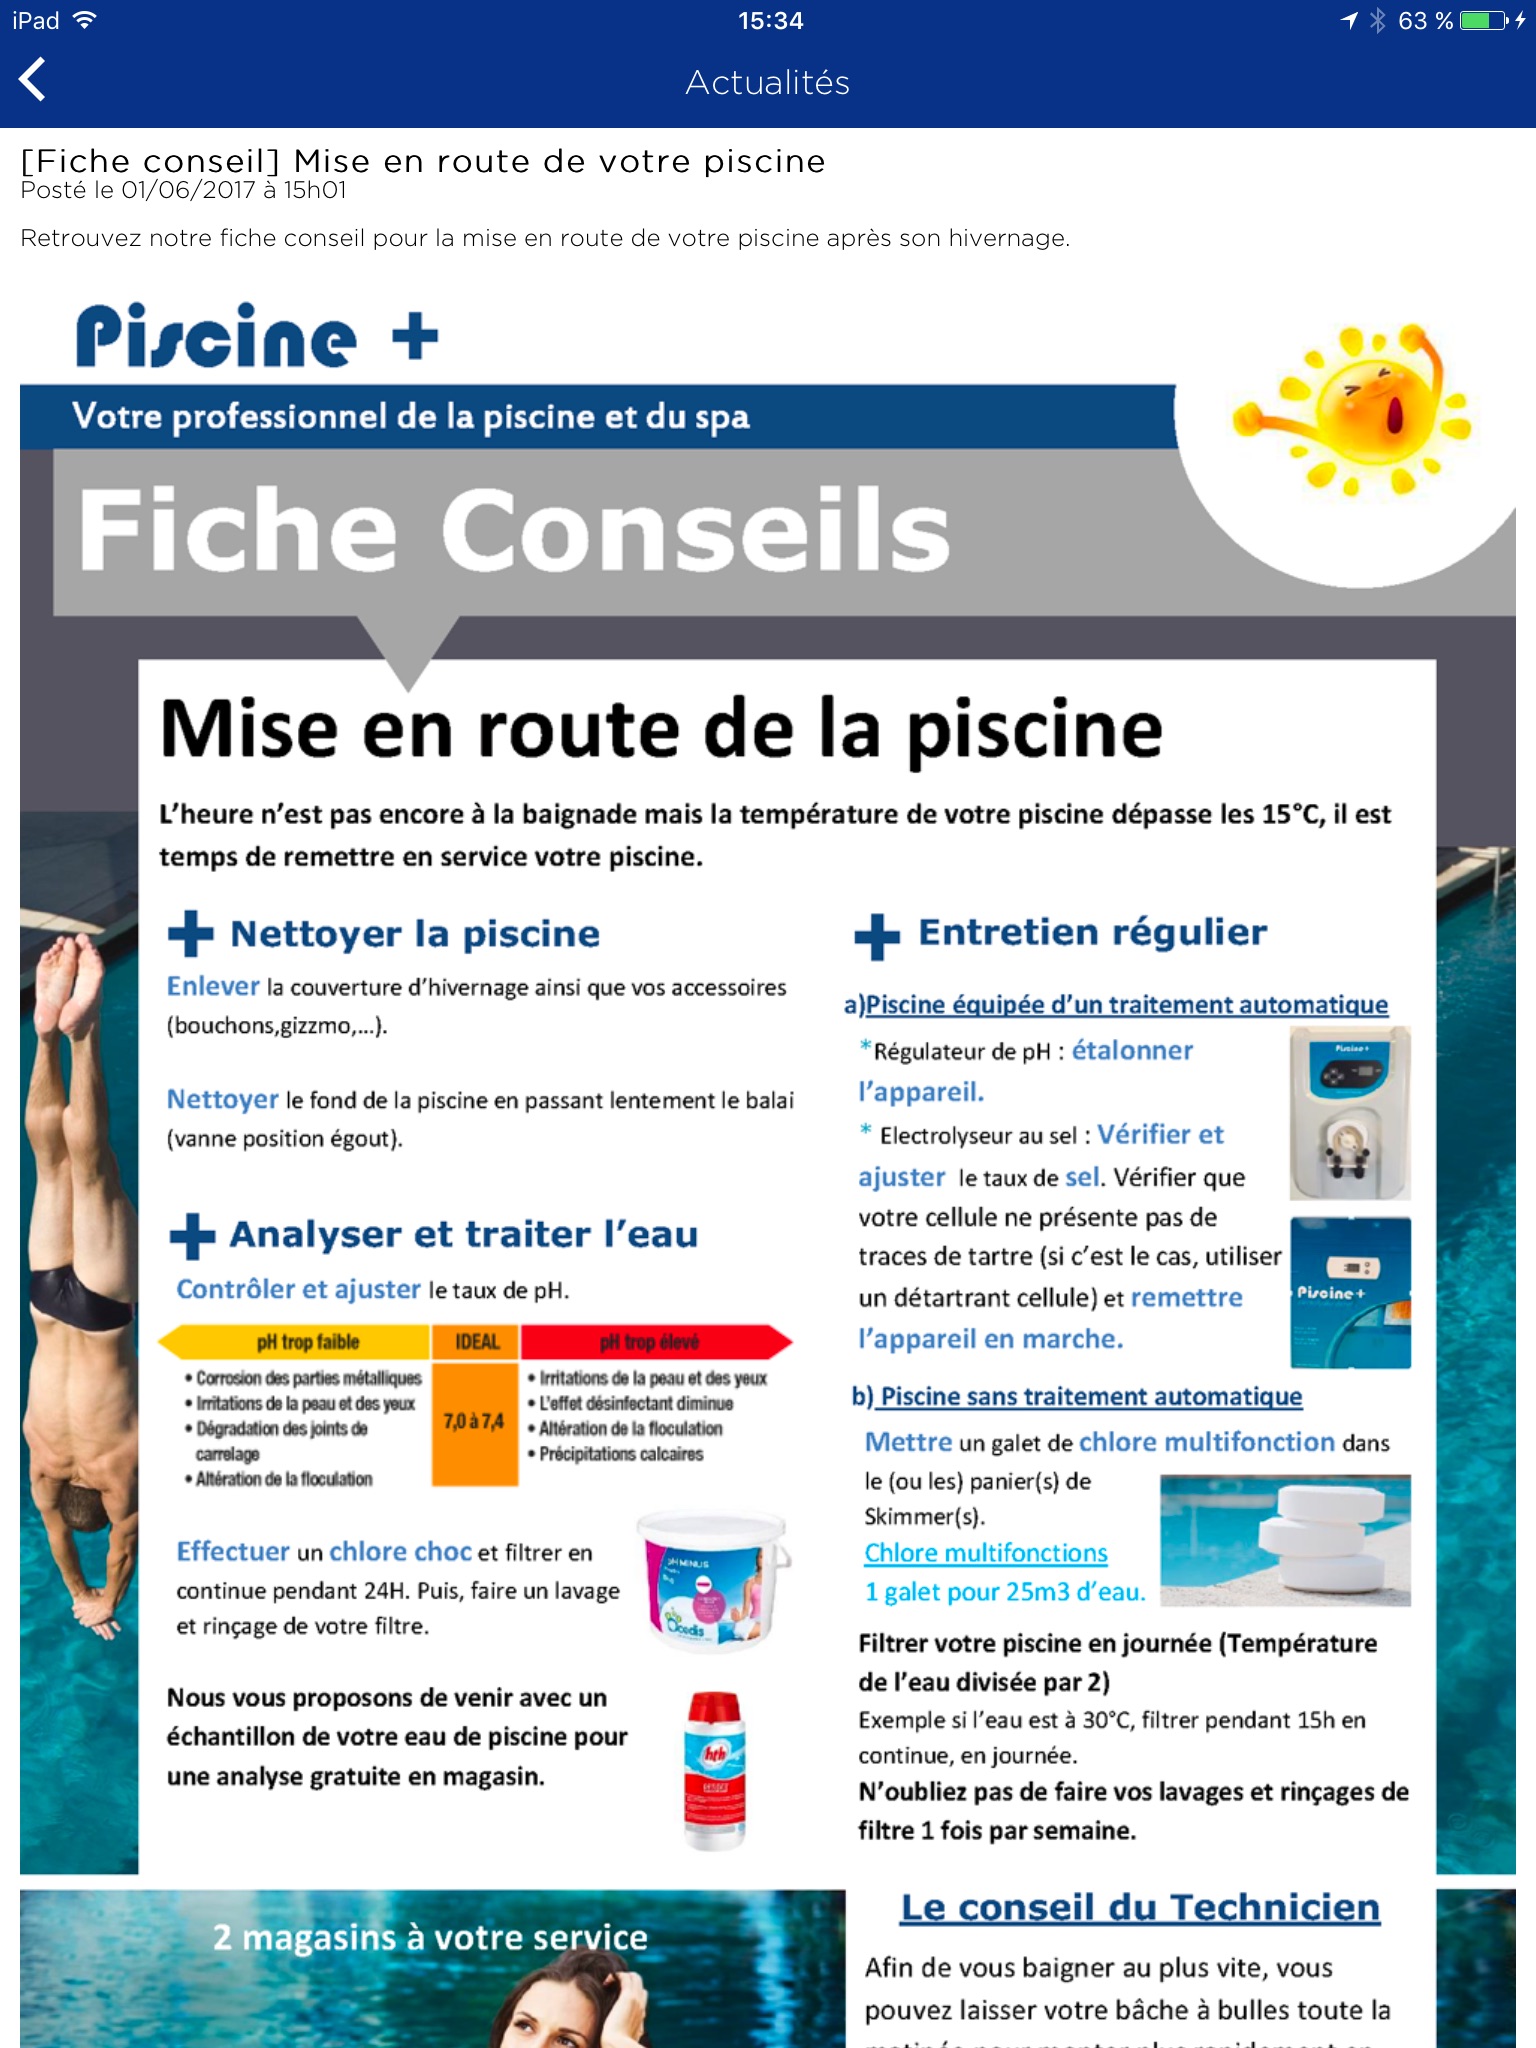 Piscine Plus : votre professionnel piscine et spa screenshot 4